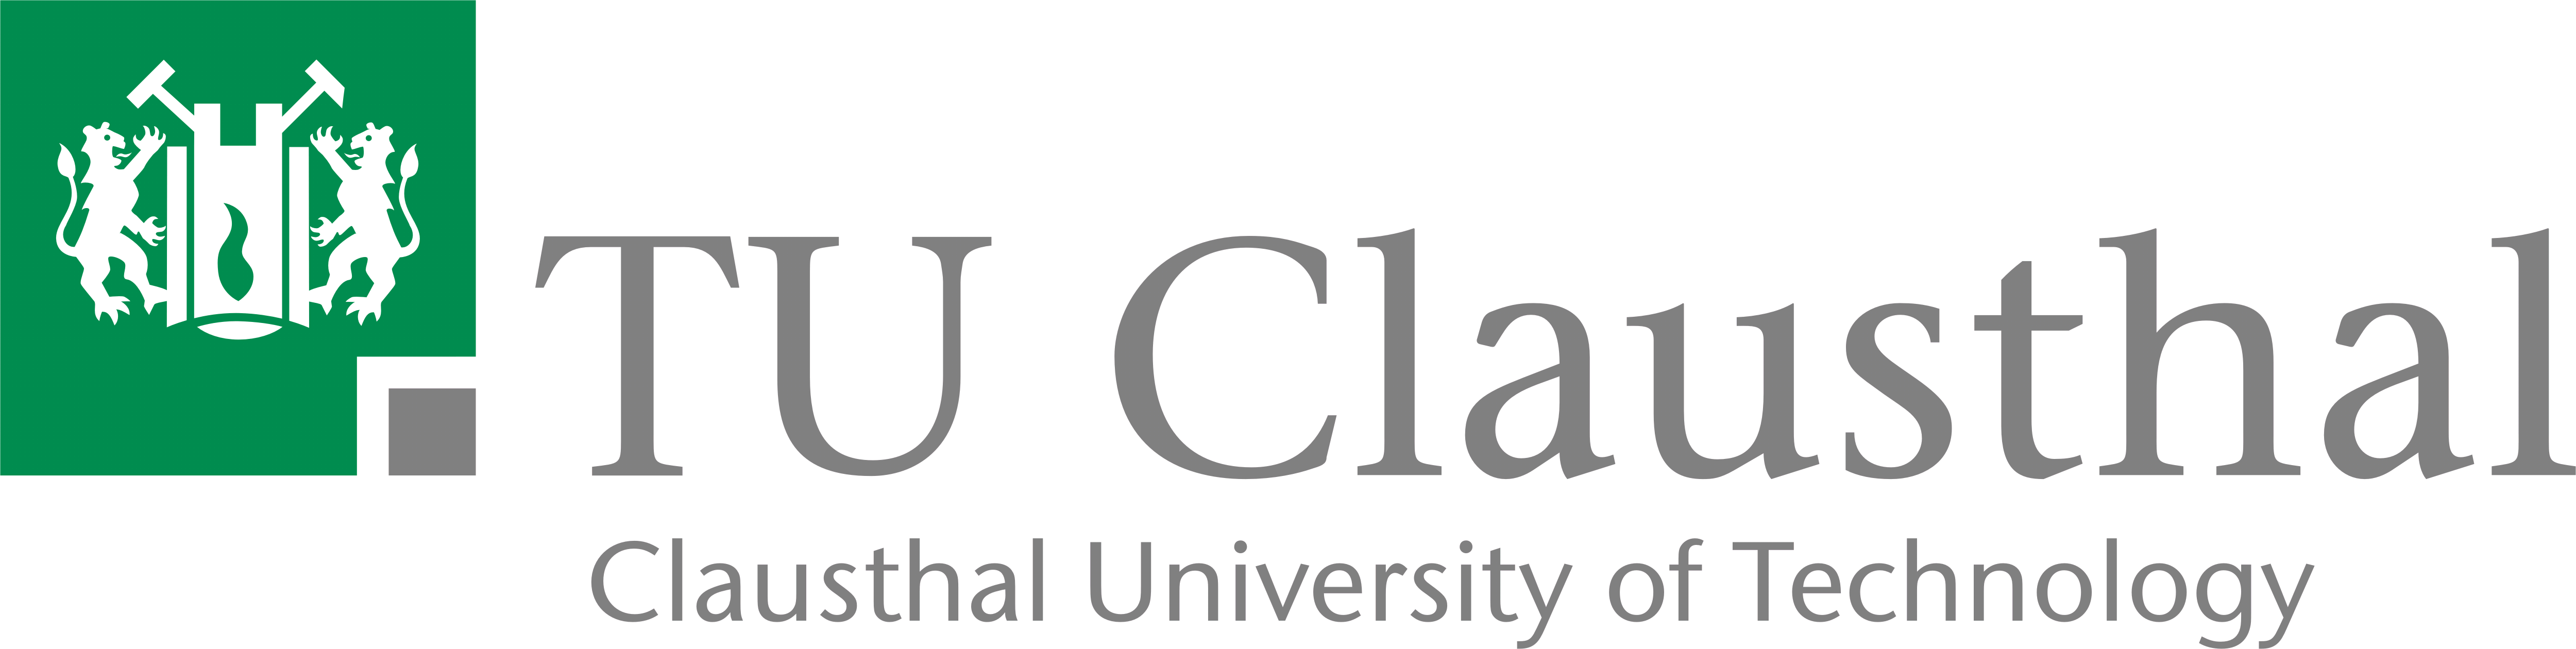 TU Clausthal logo